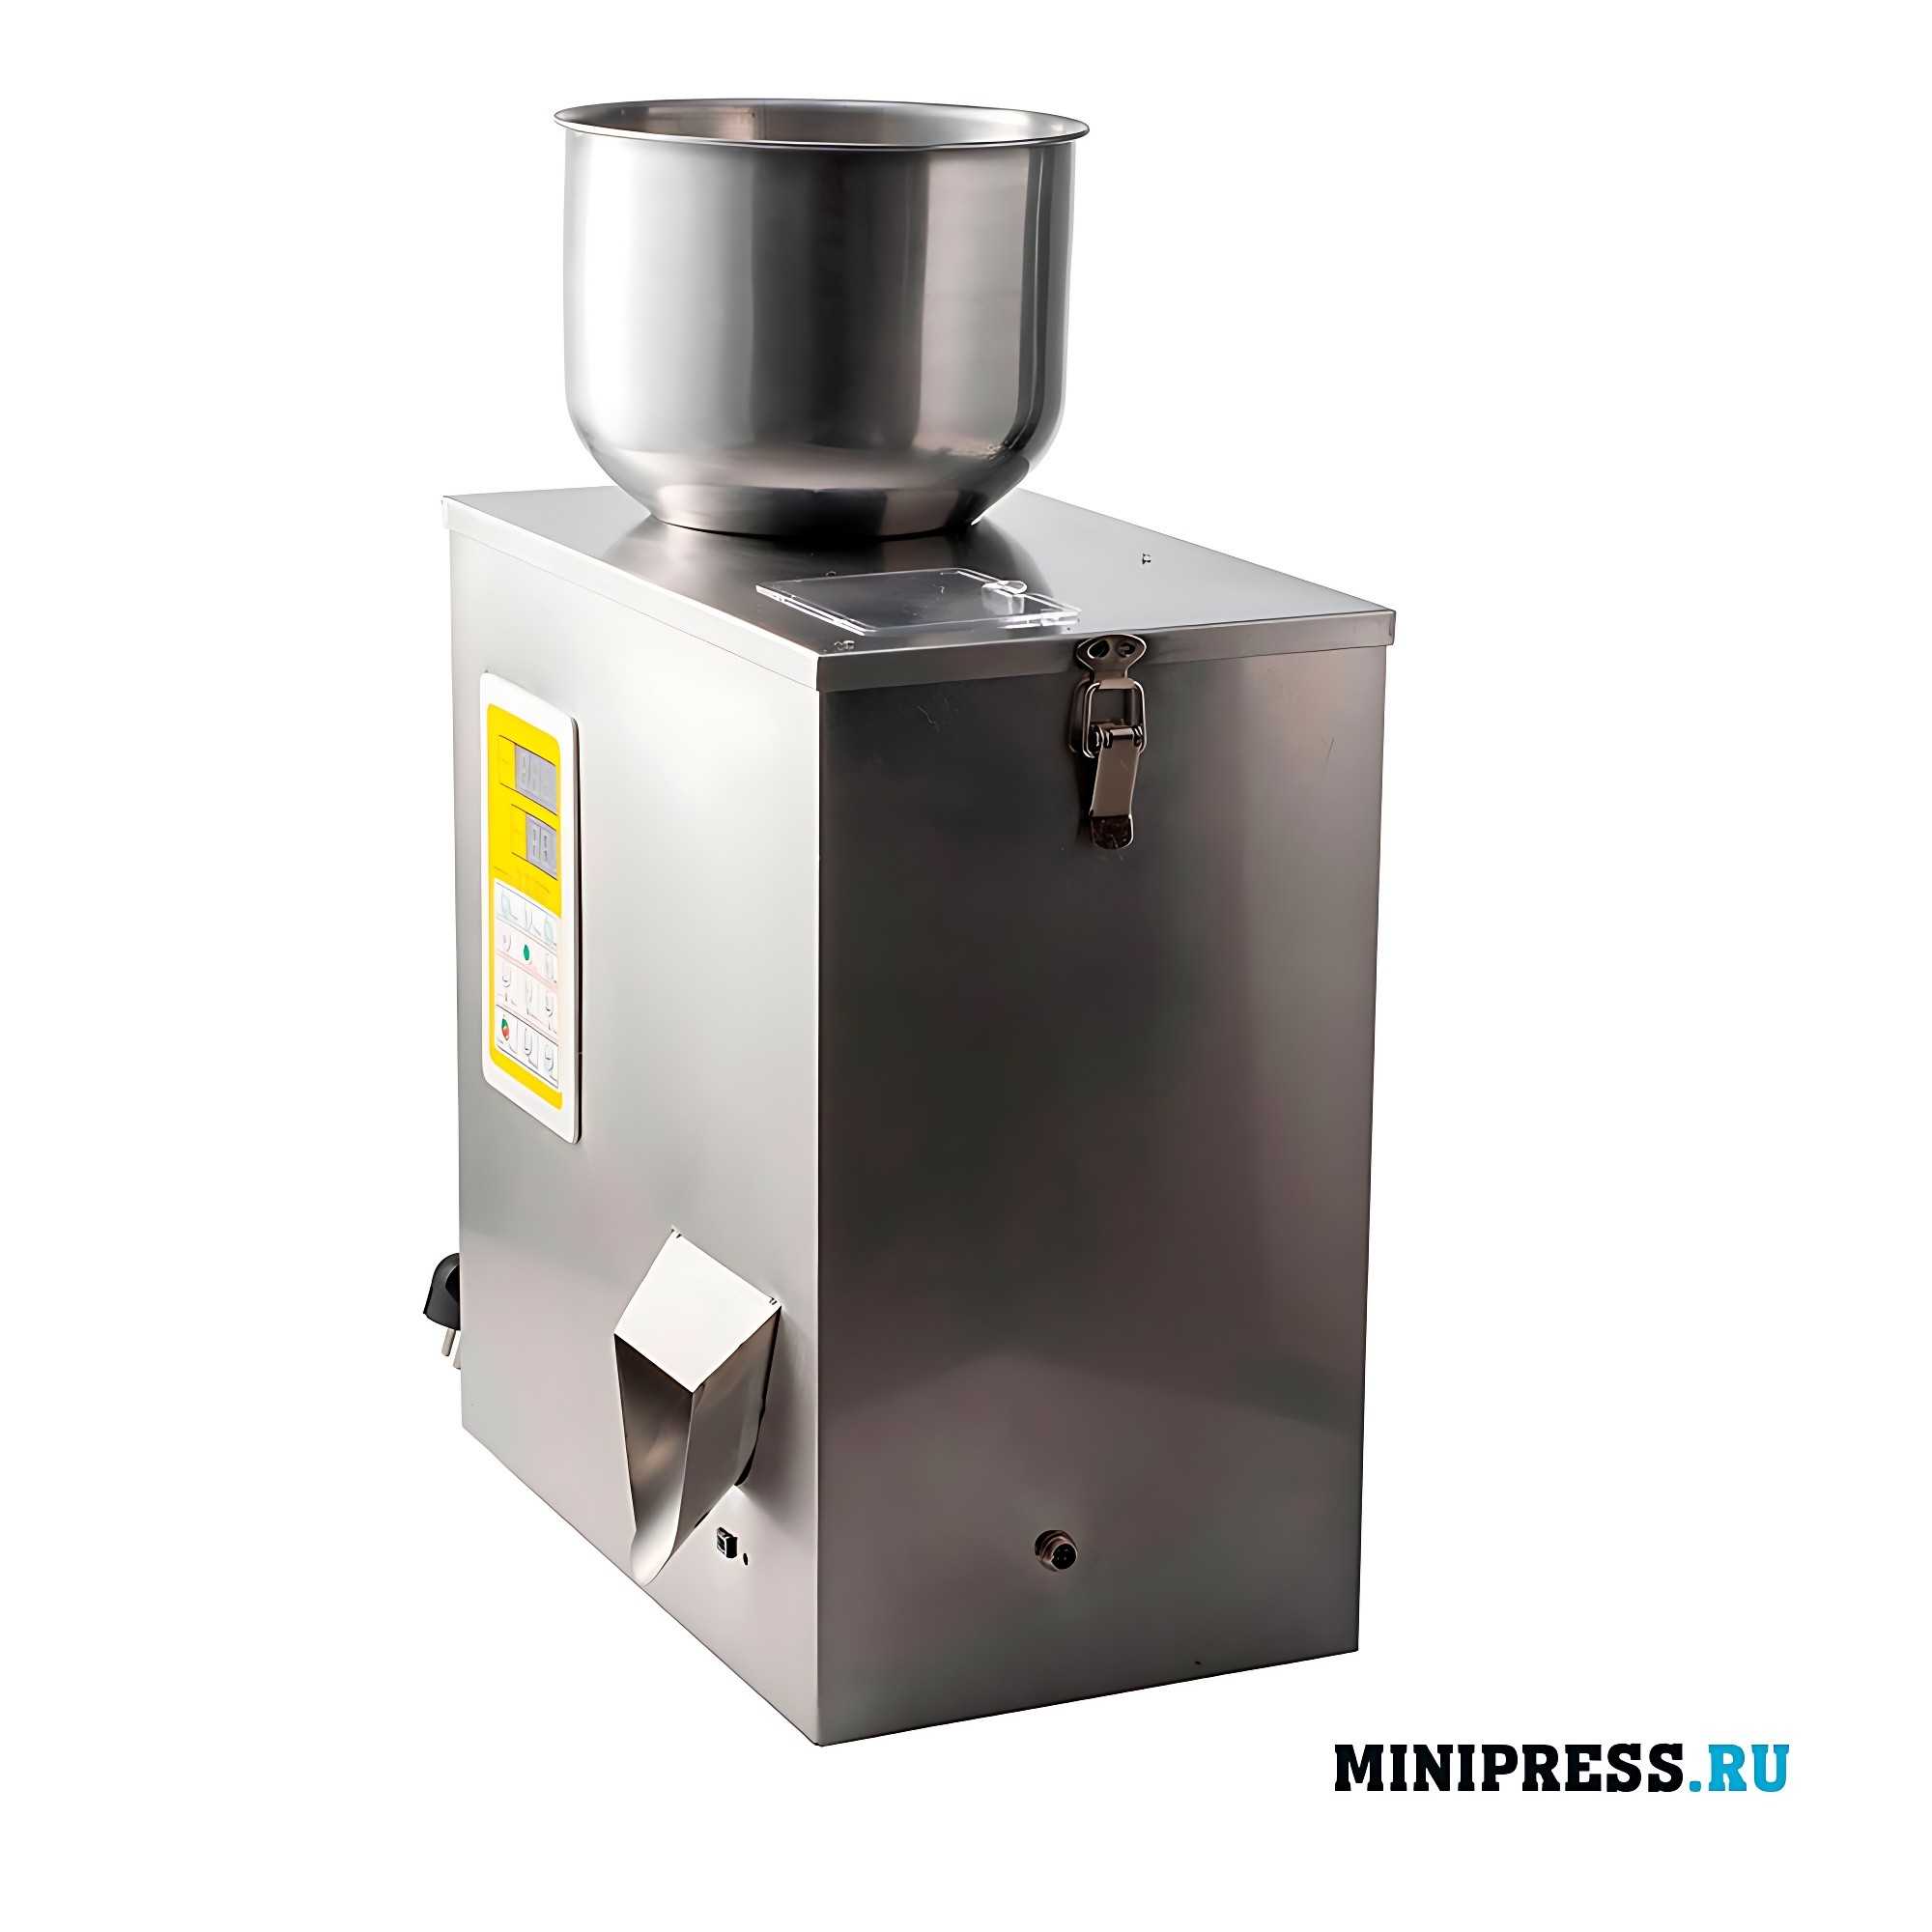 Vibrating dosing machine for bulk products DG-01